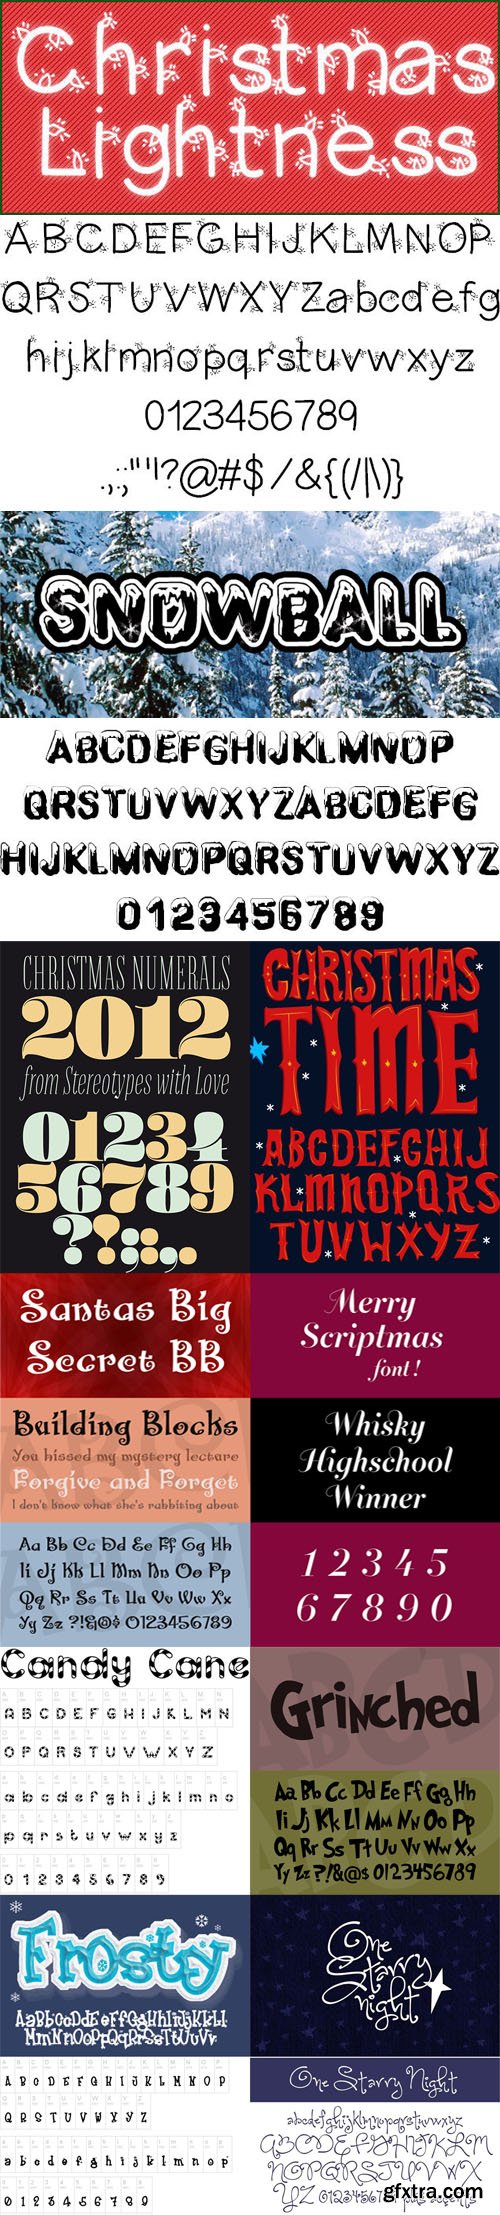 10 Christmas Fonts - 2017 Festive Holiday Fonts